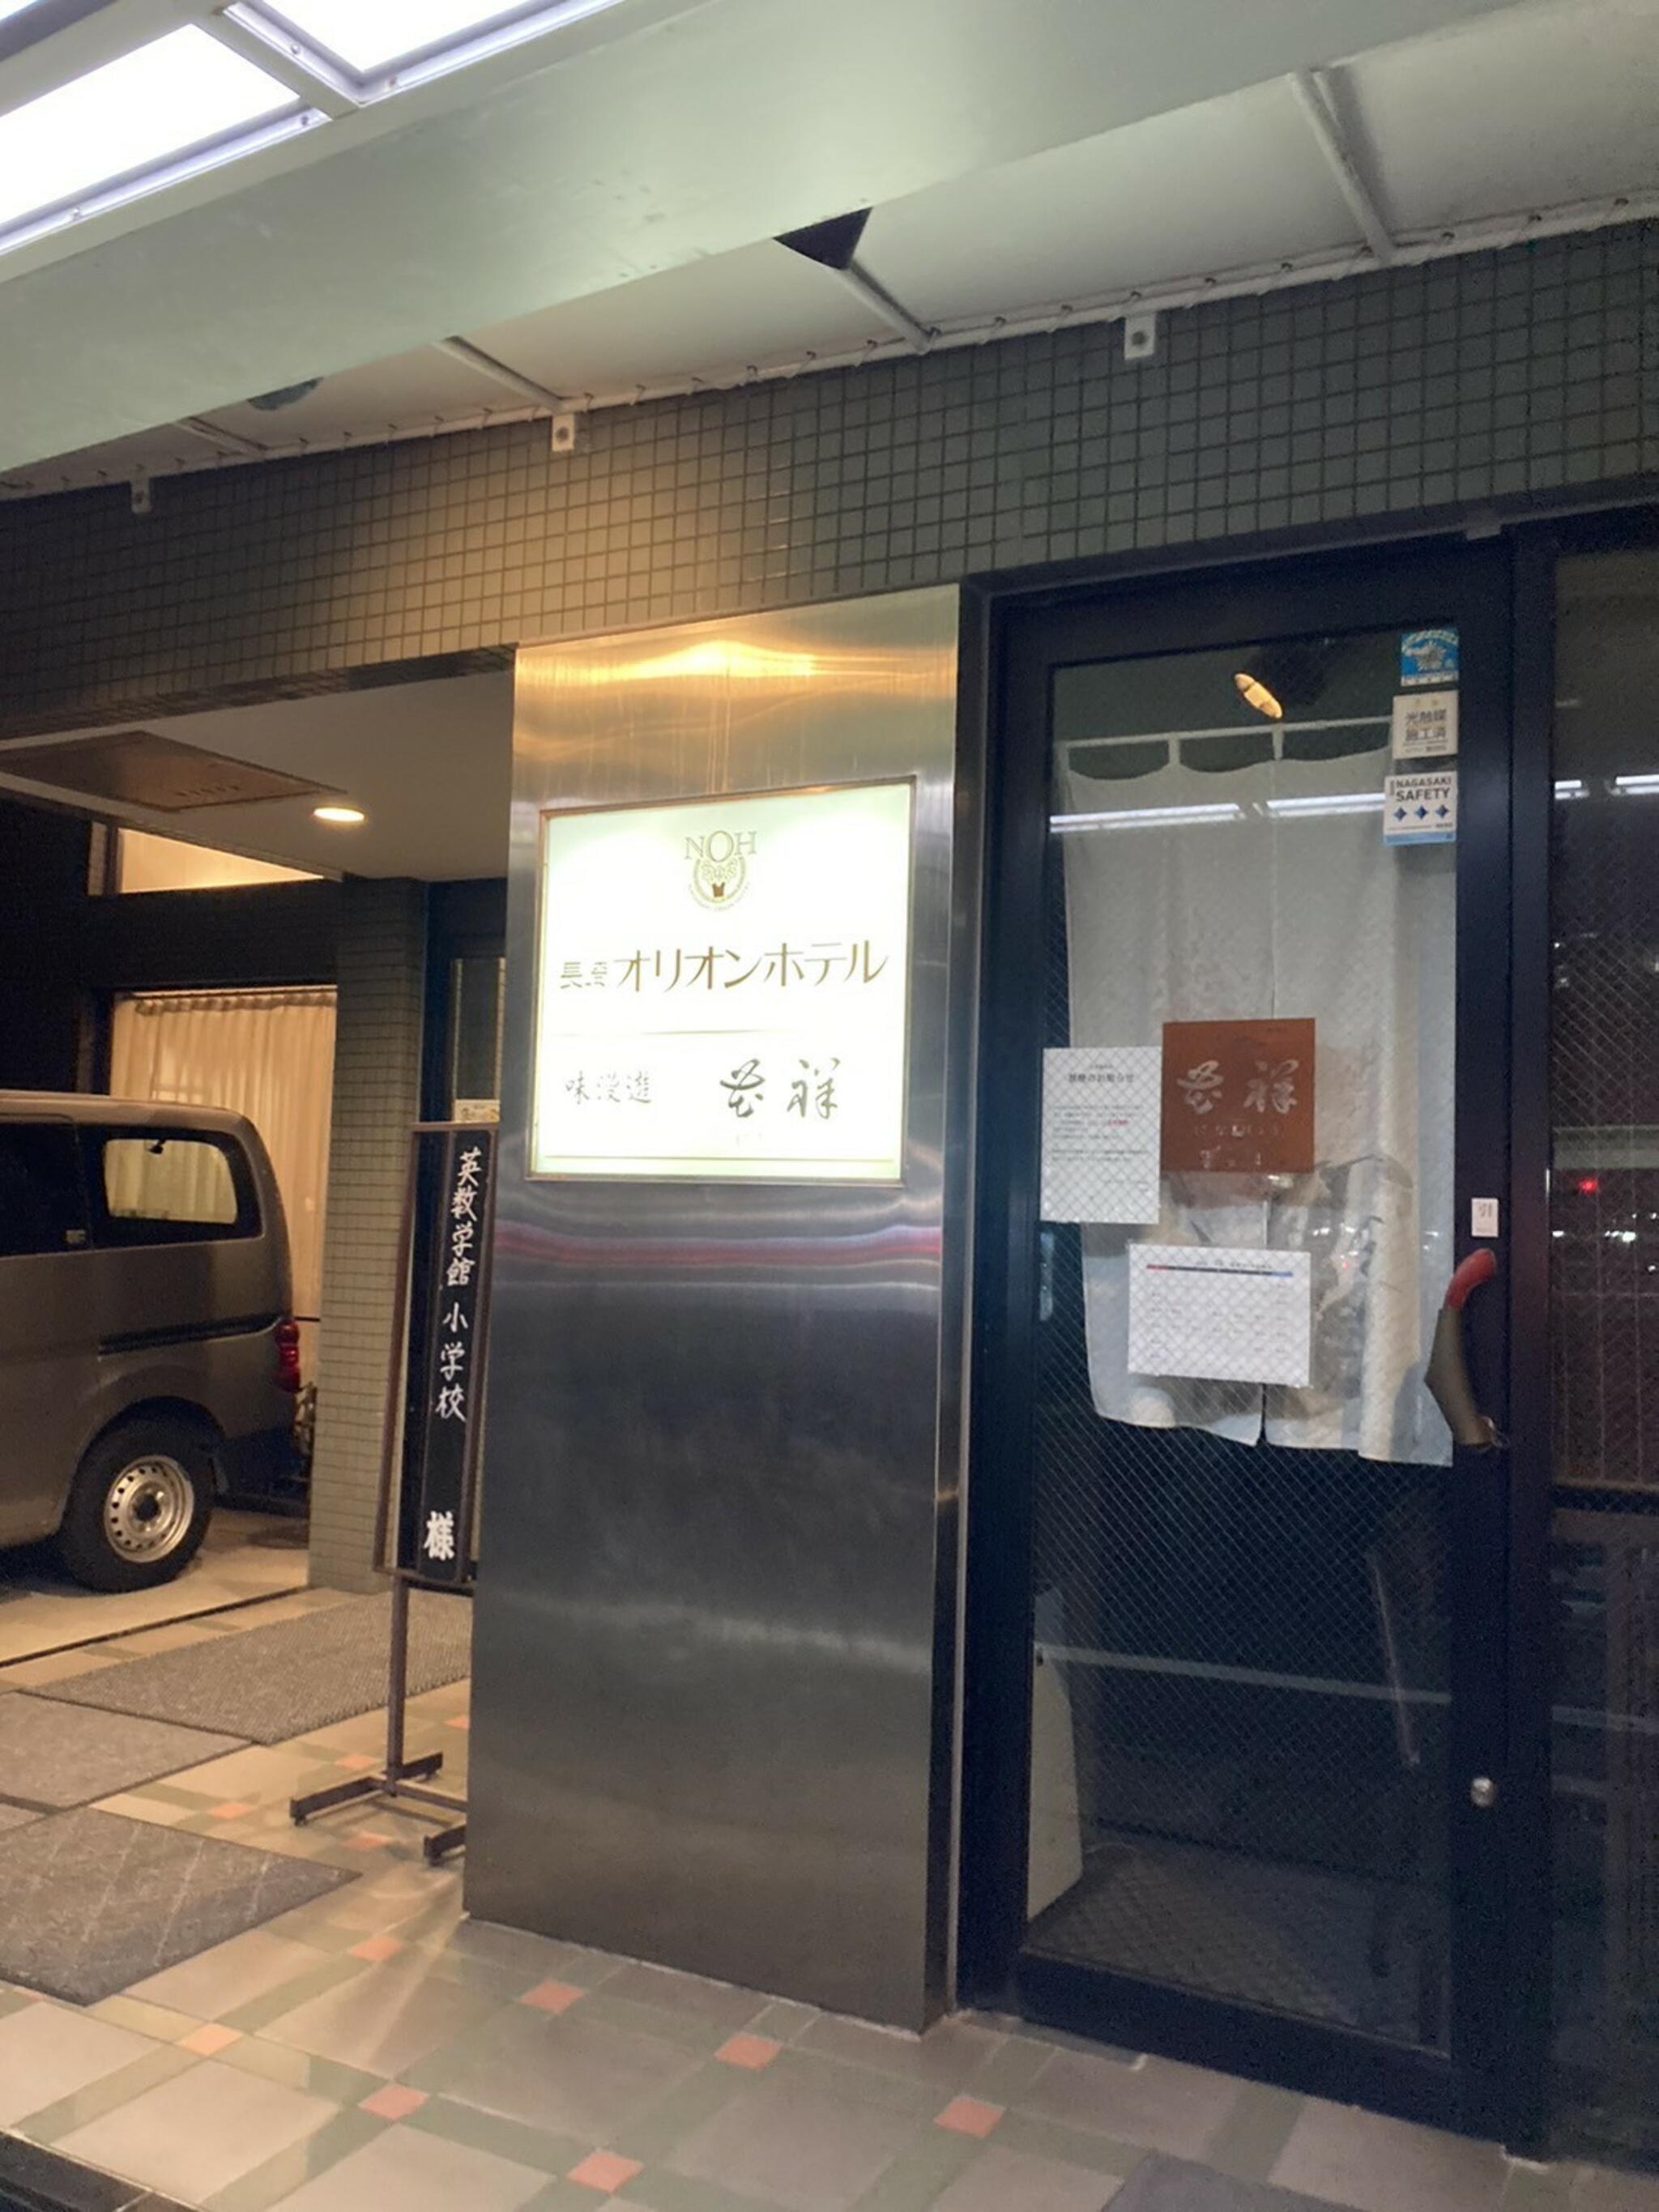 OYO 長崎オリオンホテル 長崎駅前の代表写真8